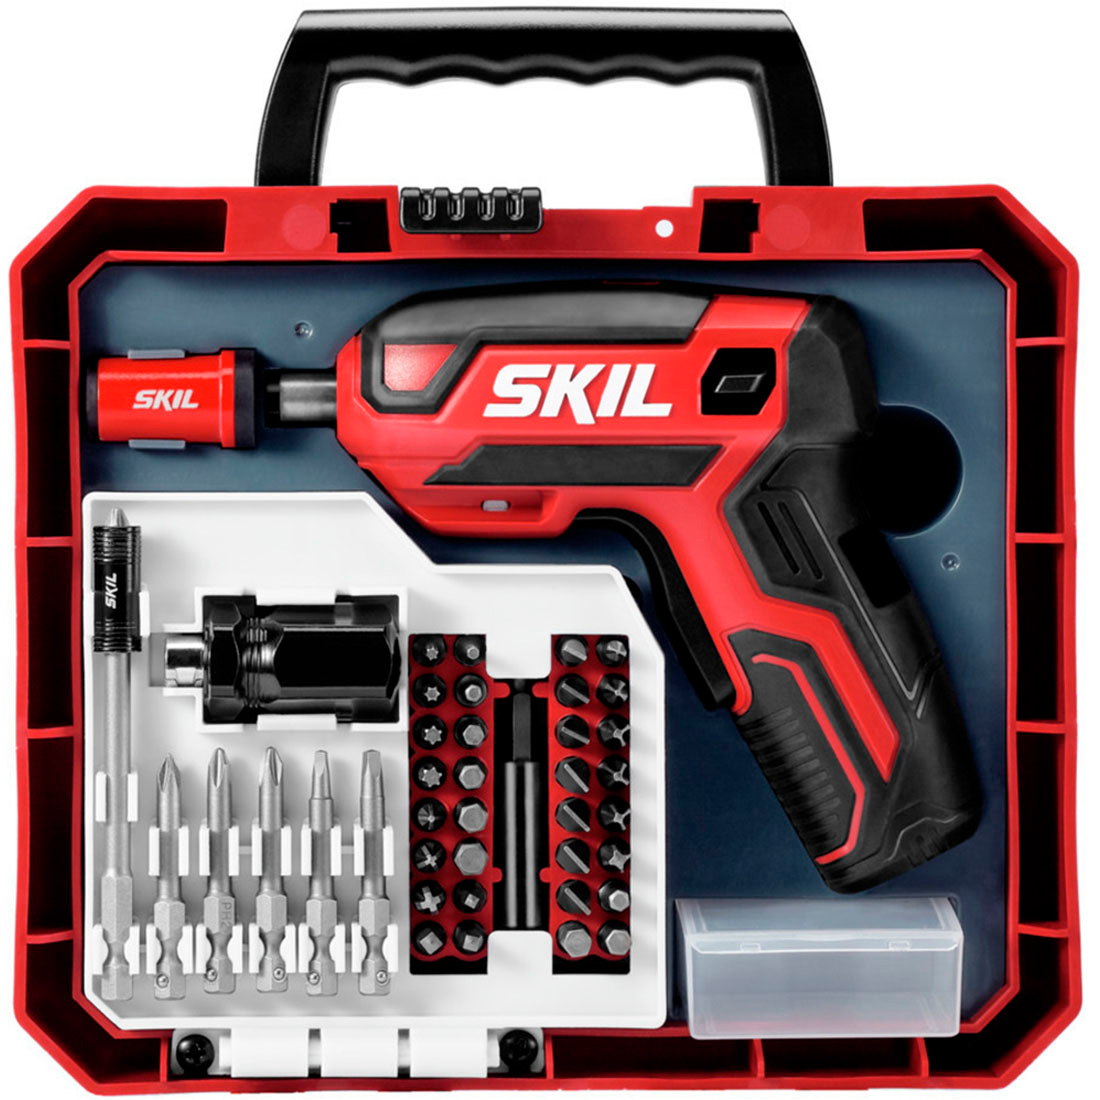 Angle View: SKIL 20V BL Oscillating Tool Kit - Red/Black